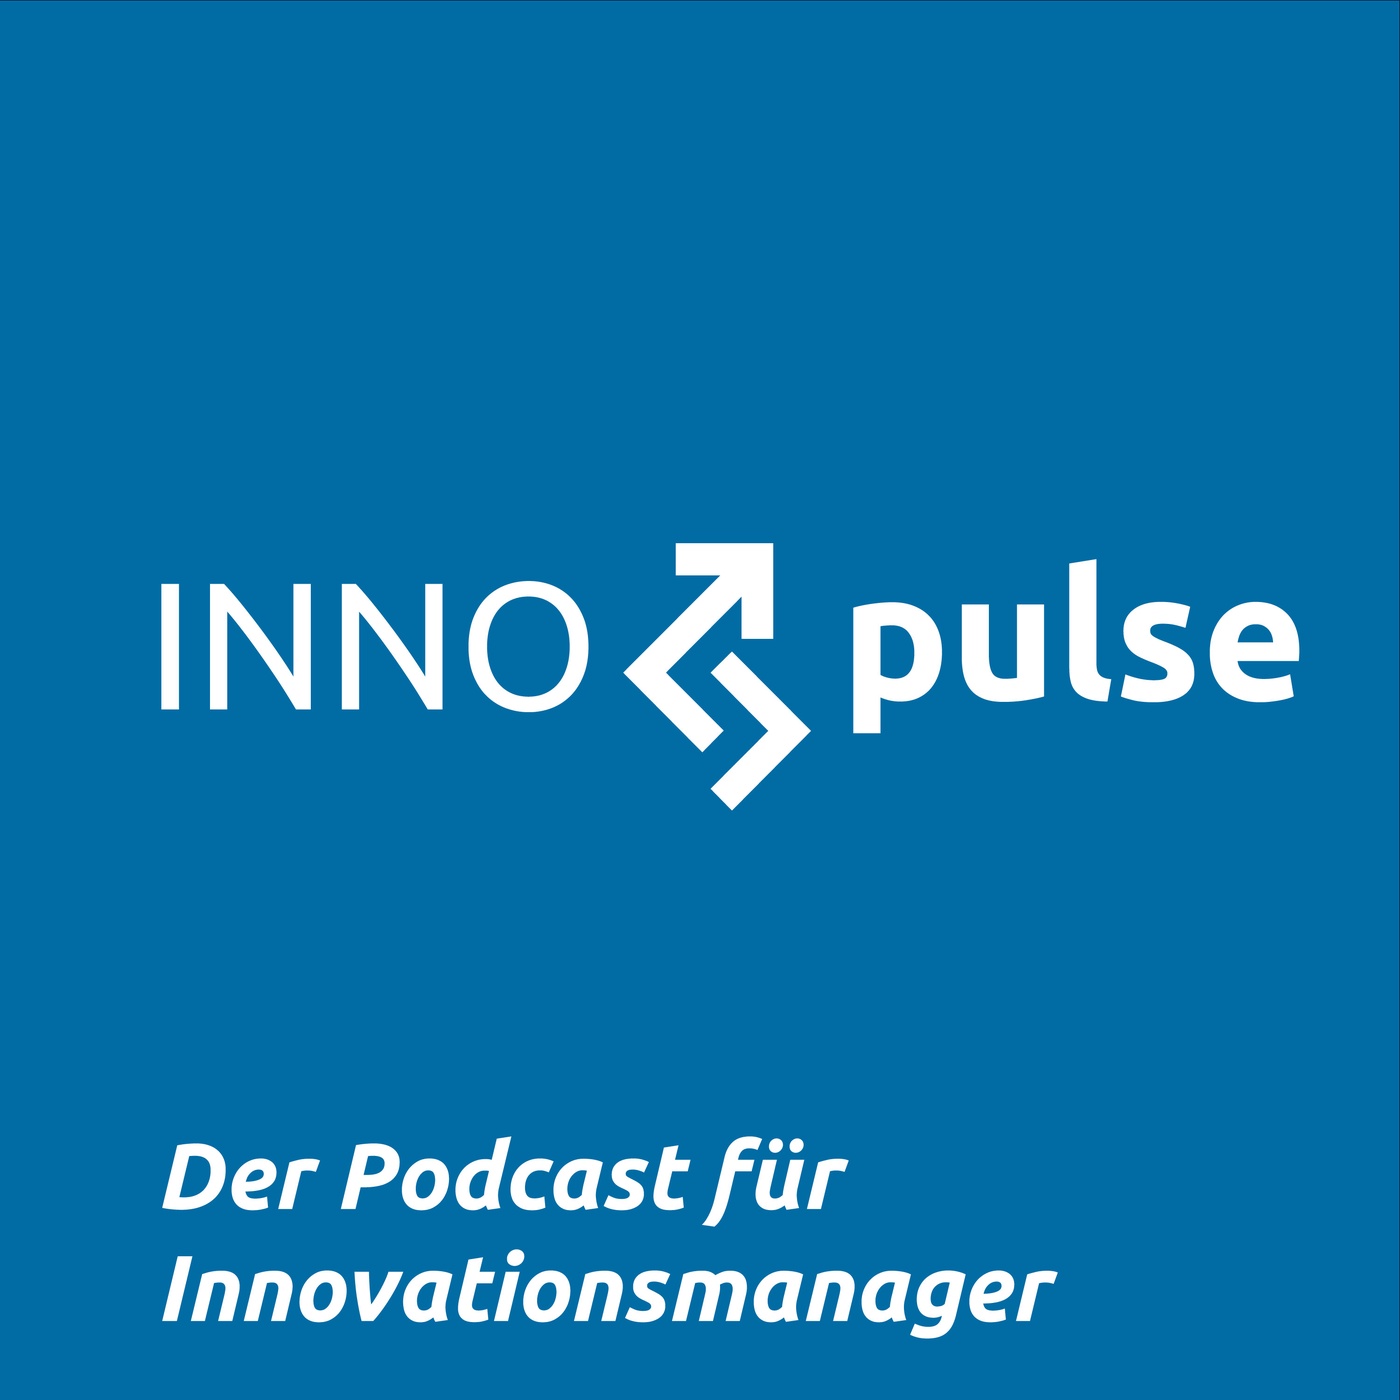 INNOpulse - Der Podcast für Innovationsmanager